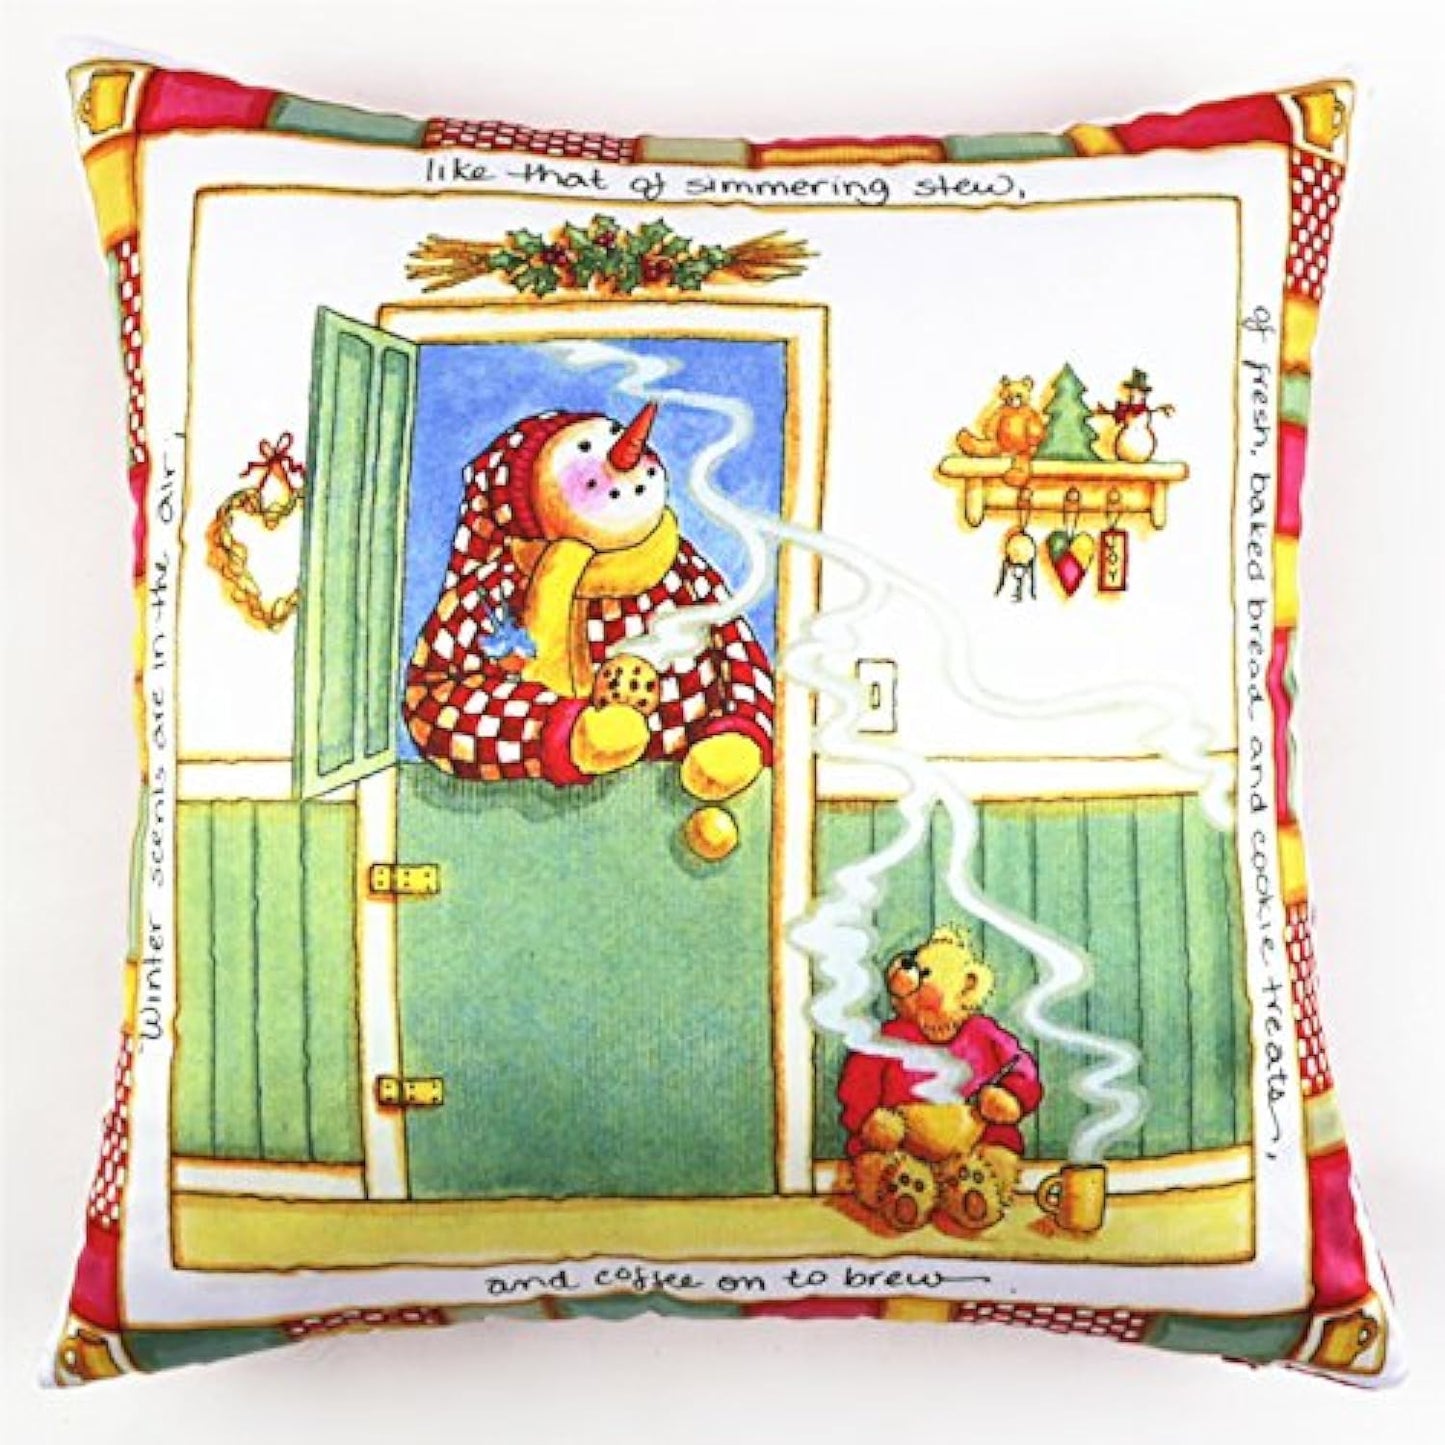 MoonRest Christmas Decorative Throw Pillow Cover Polyester décor Cushion Pillowcase